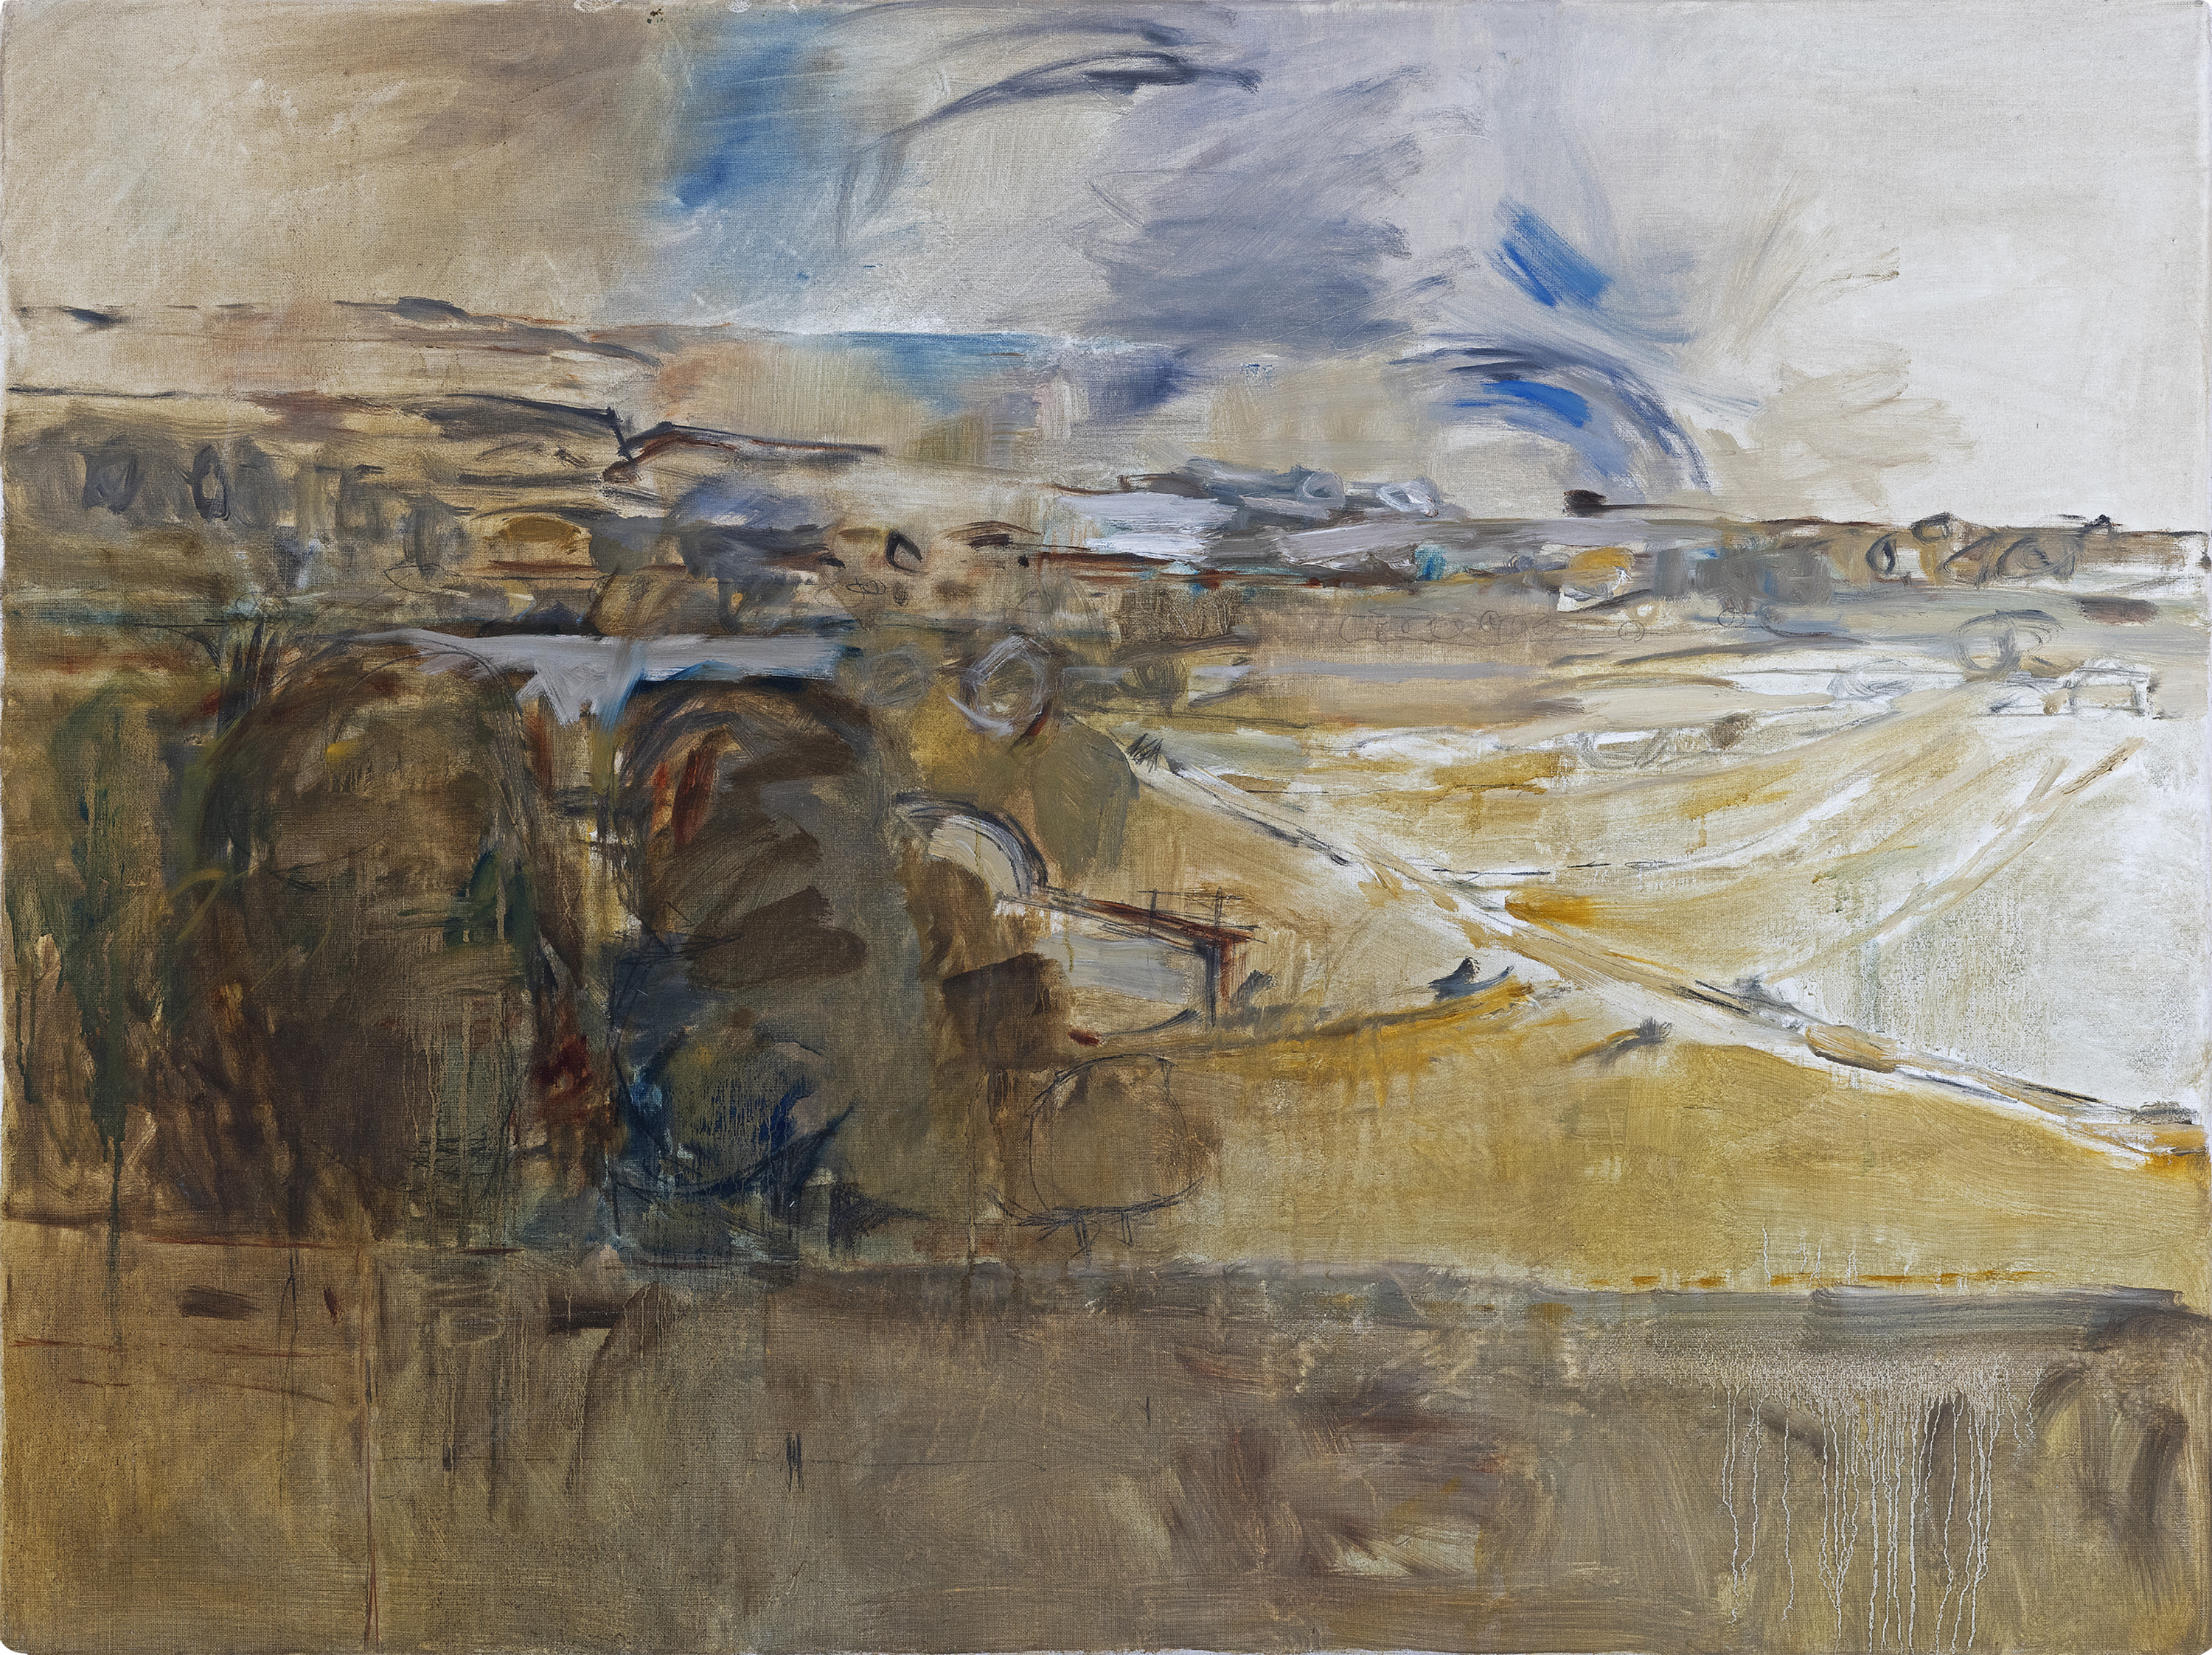 Basil Blackshaw RUA HRHA (1932-2016) Landscape (2), c.1966 Oil on canvas, 100 x 130cm (39¼ x